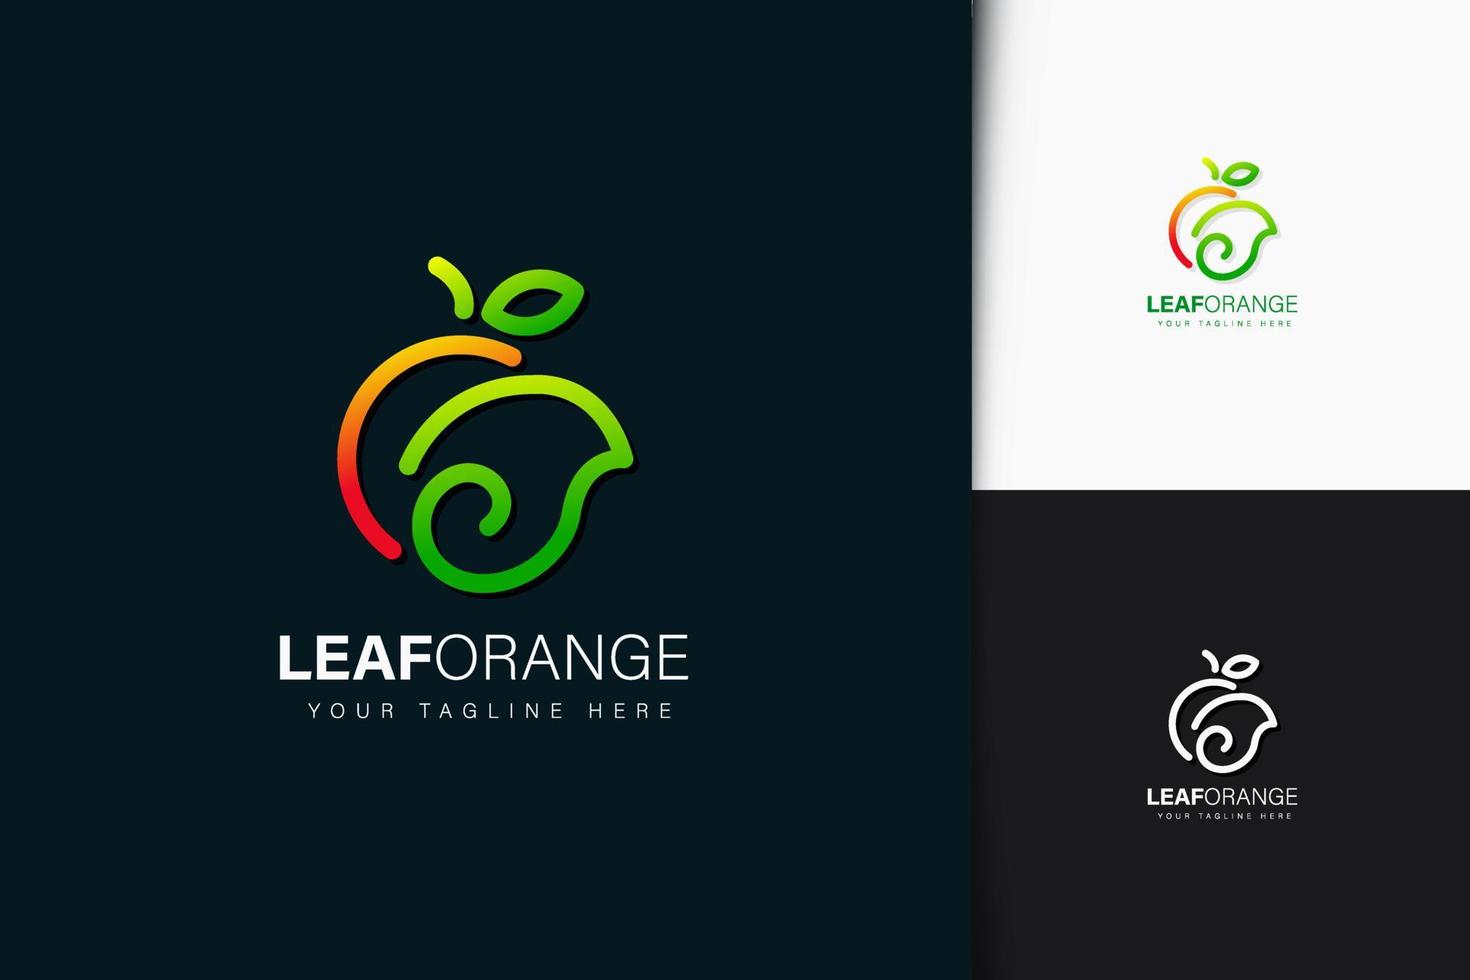 Leaf orange logo design with gradient vector